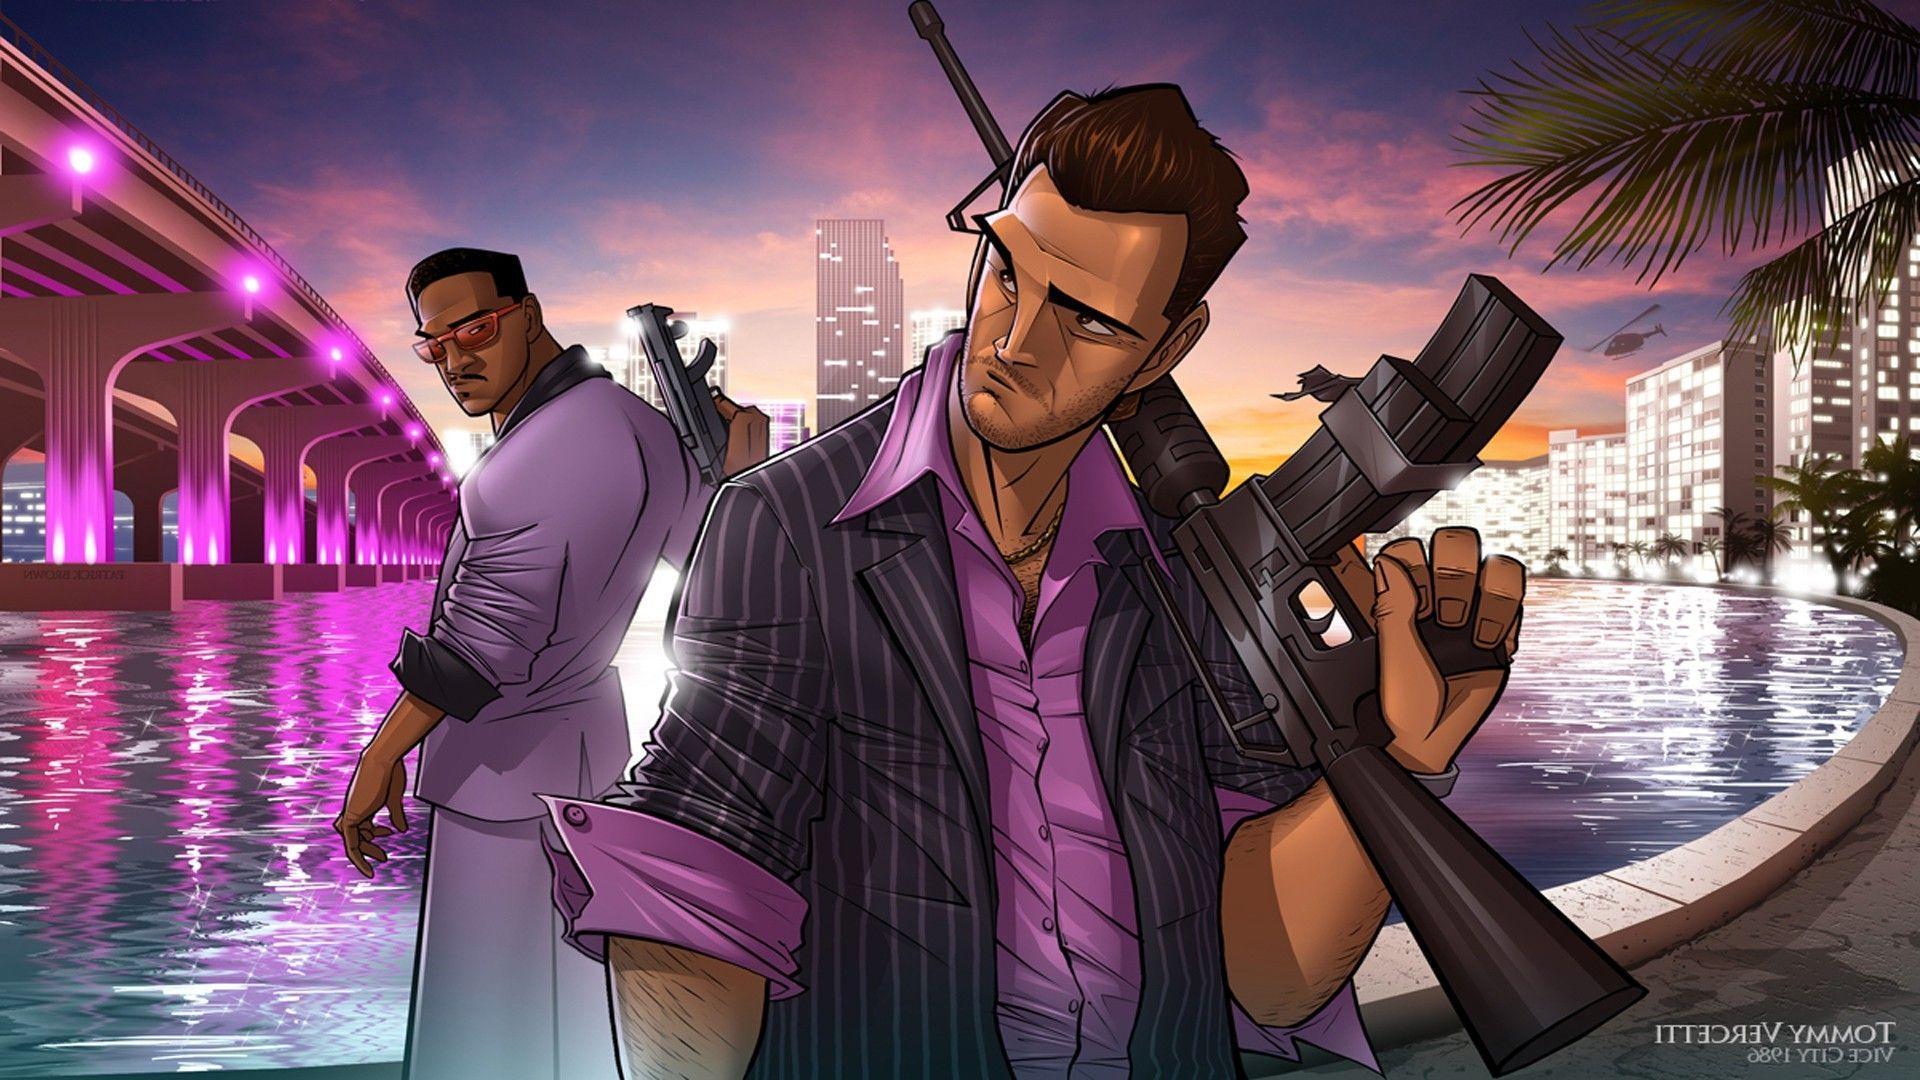 Grand Theft Auto Vice City, PC Gaming, Tommy Vercetti, Lance Vance